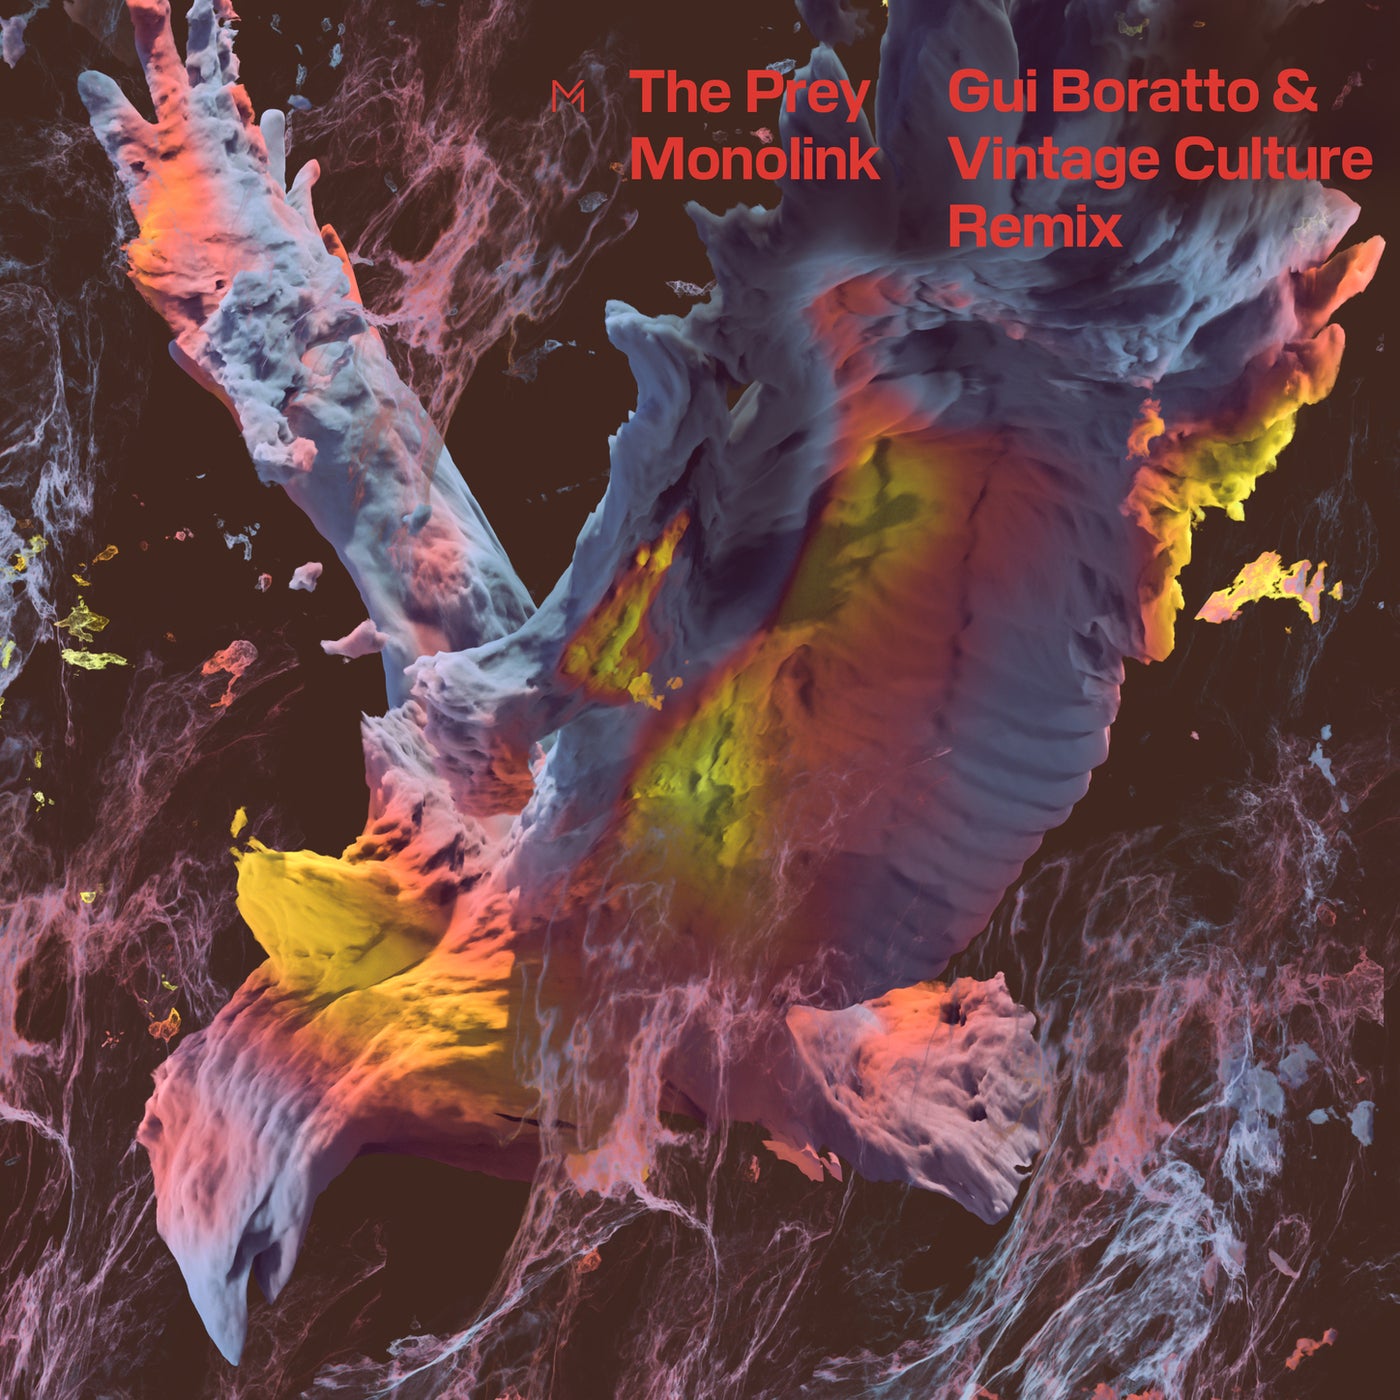 Download The Prey (Gui Boratto & Vintage Culture Remix) on Electrobuzz